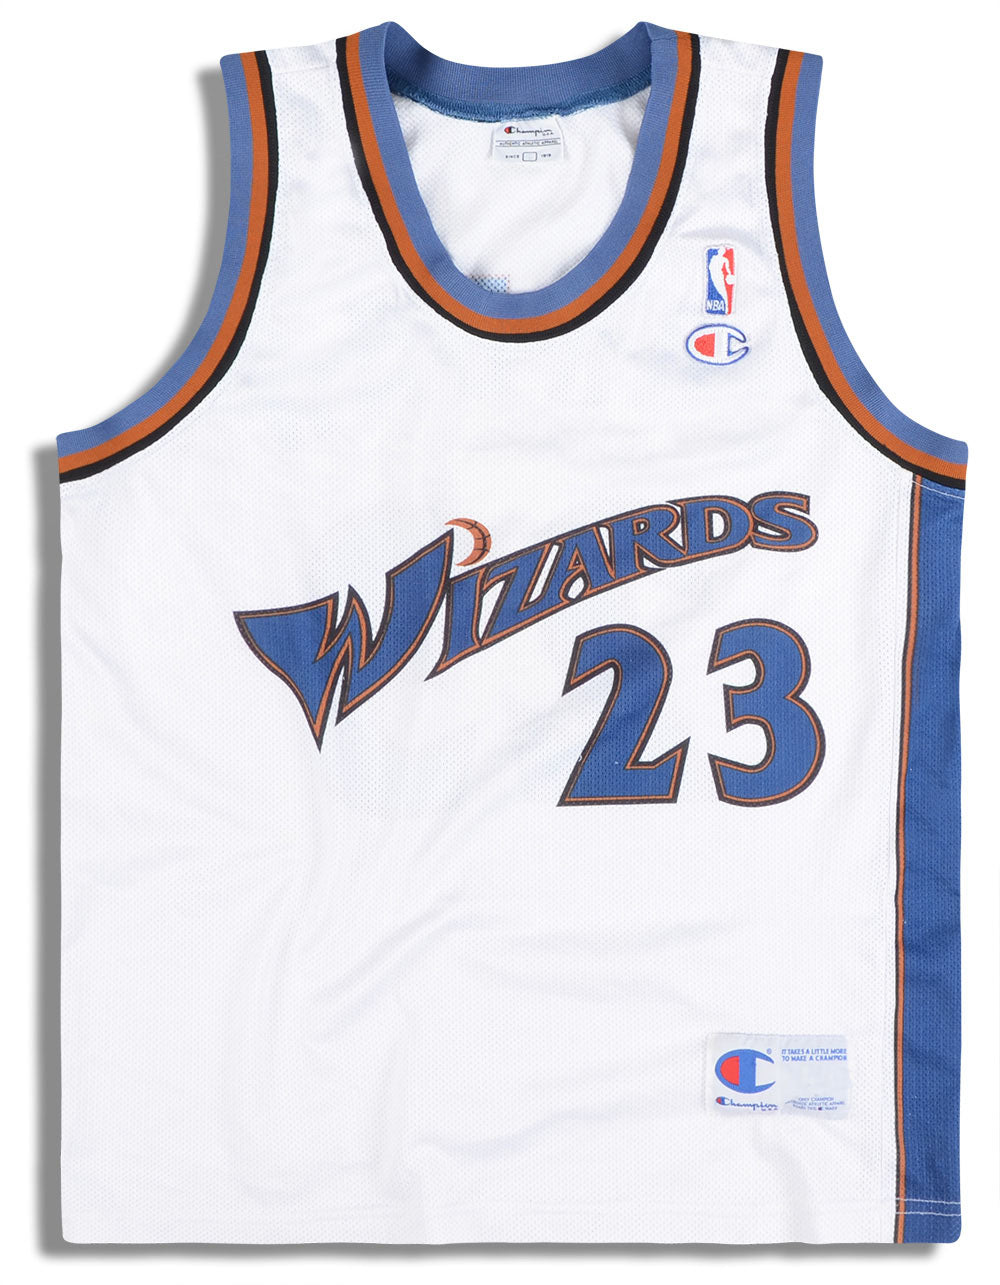 Washington Wizards NBA Store Jersey Basketball uniform, nba, white